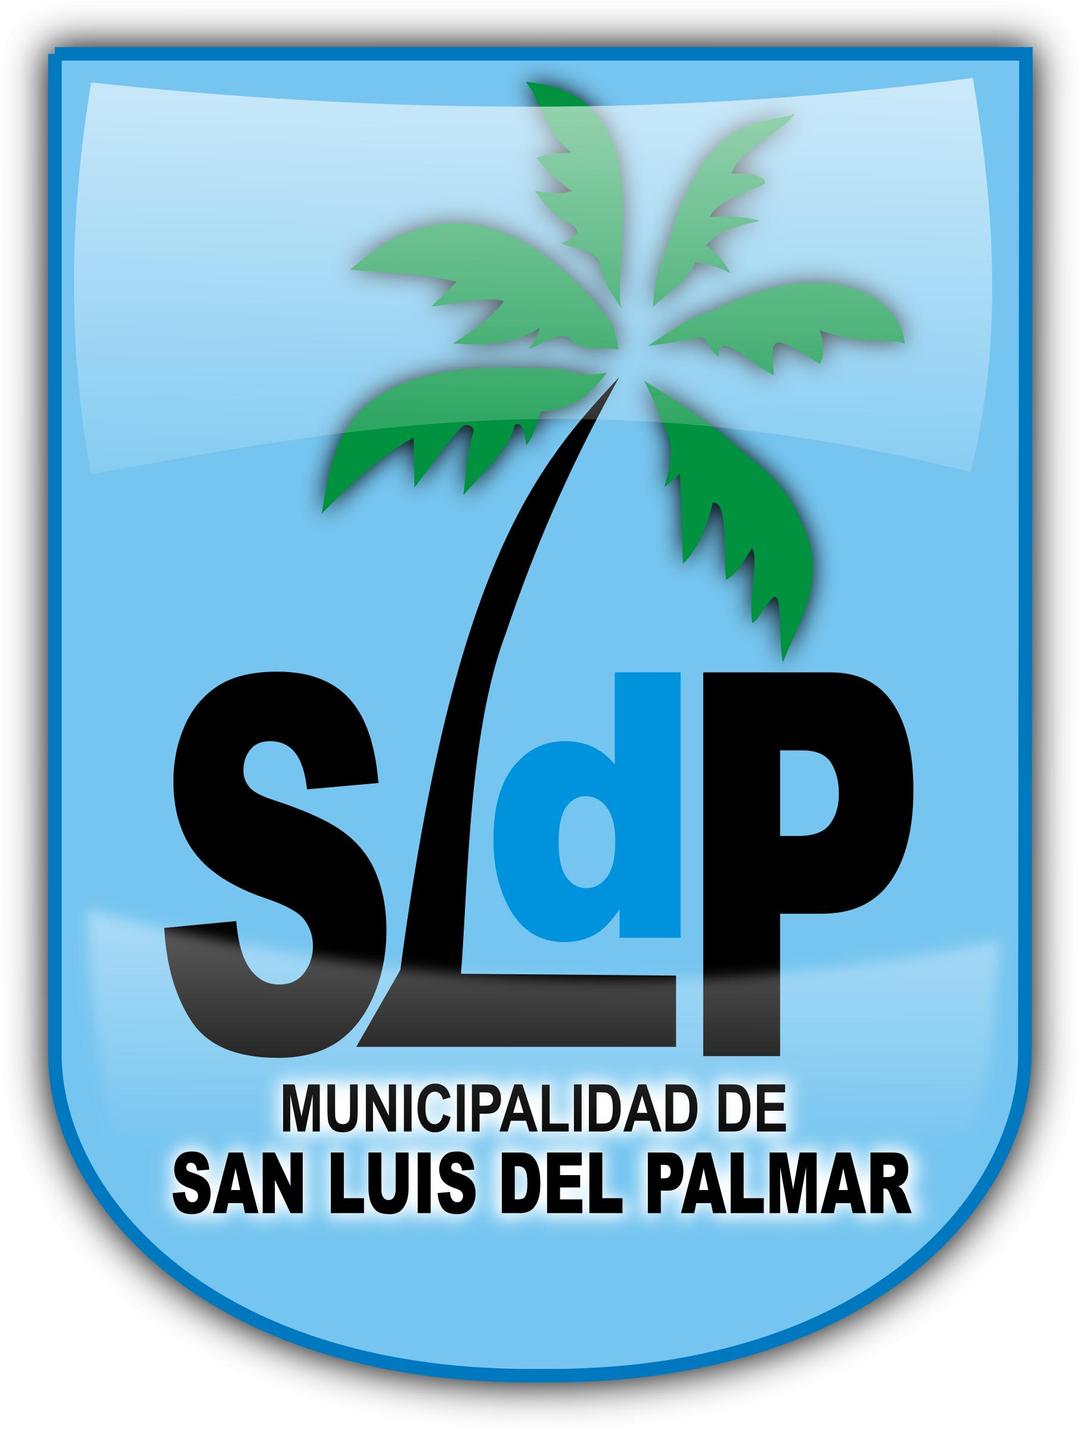 Escudo de la Municipalidad de San Luis del Palmar png transparent